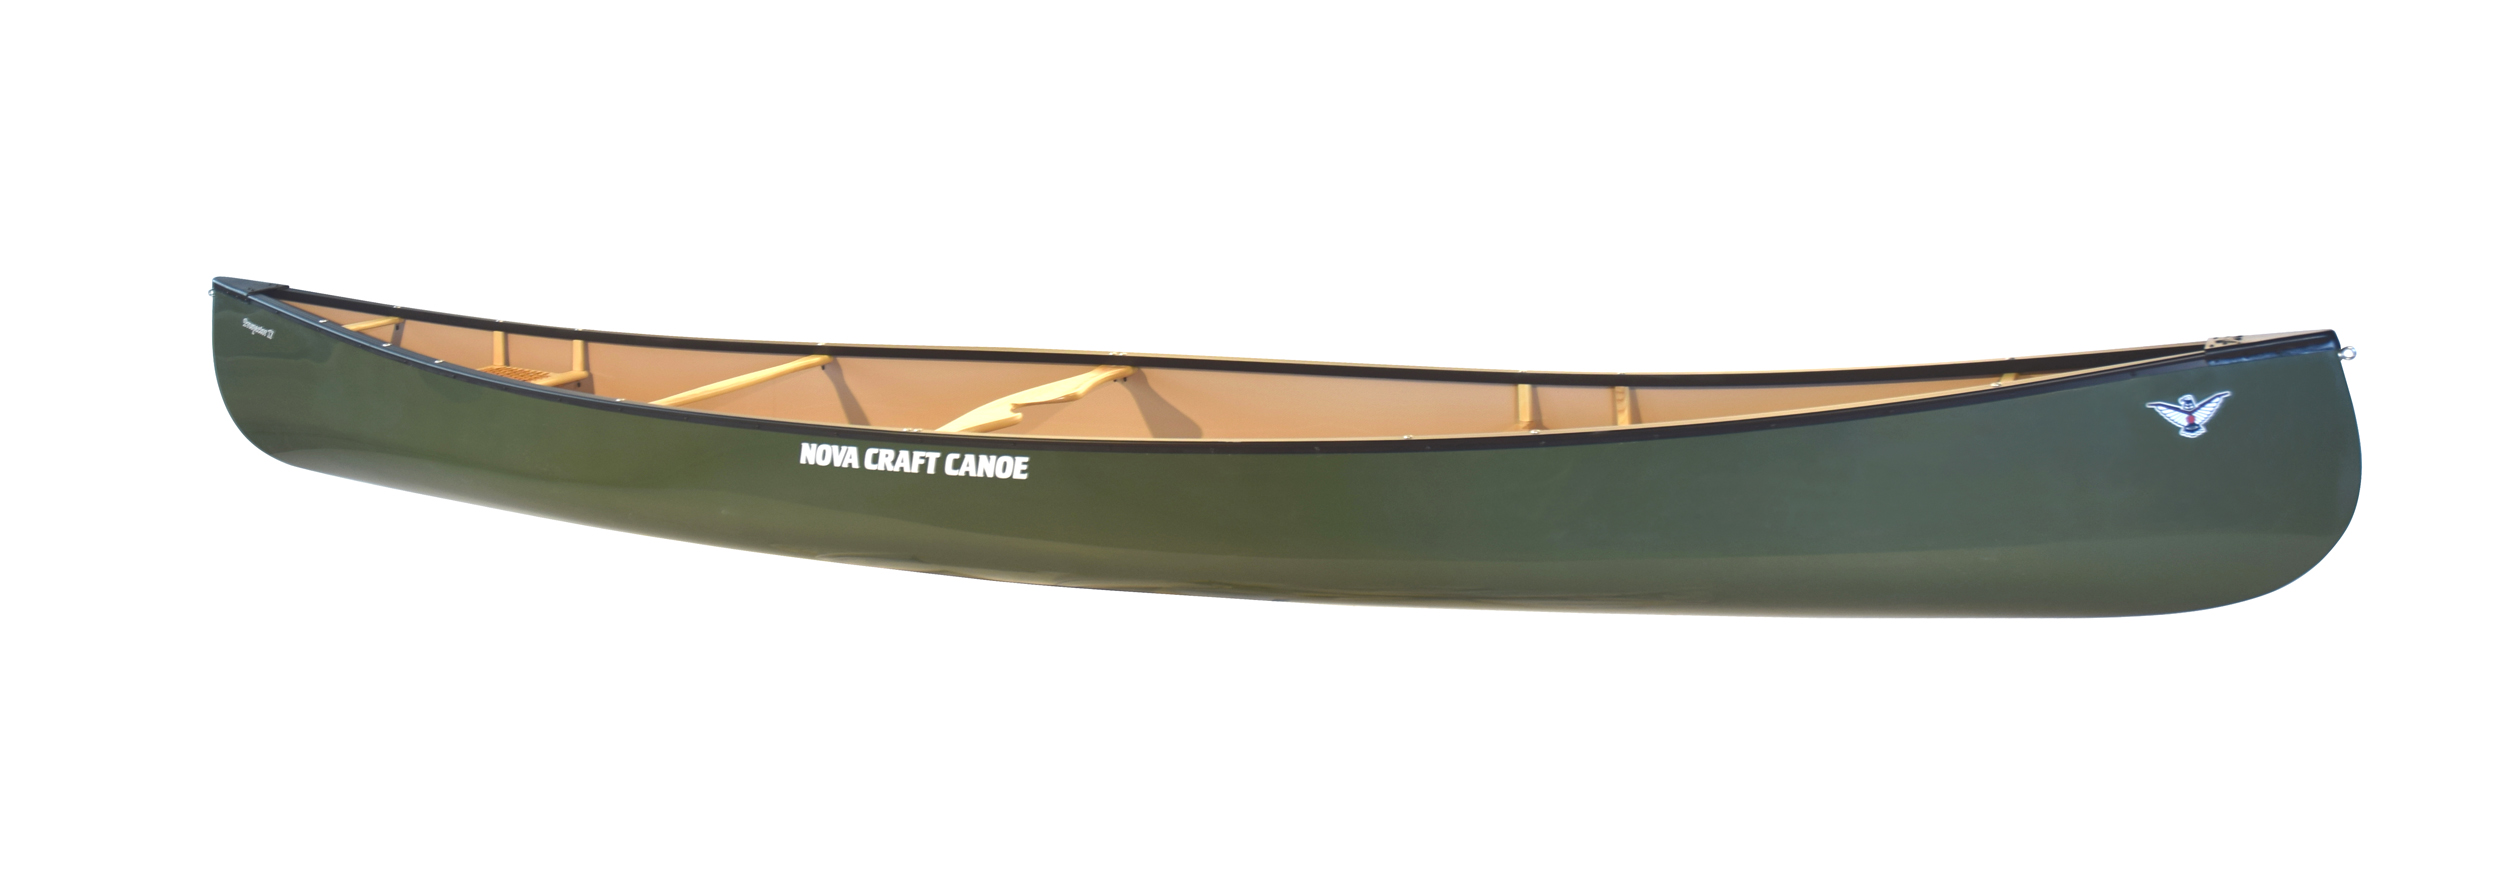 prospector 15 feet canoes